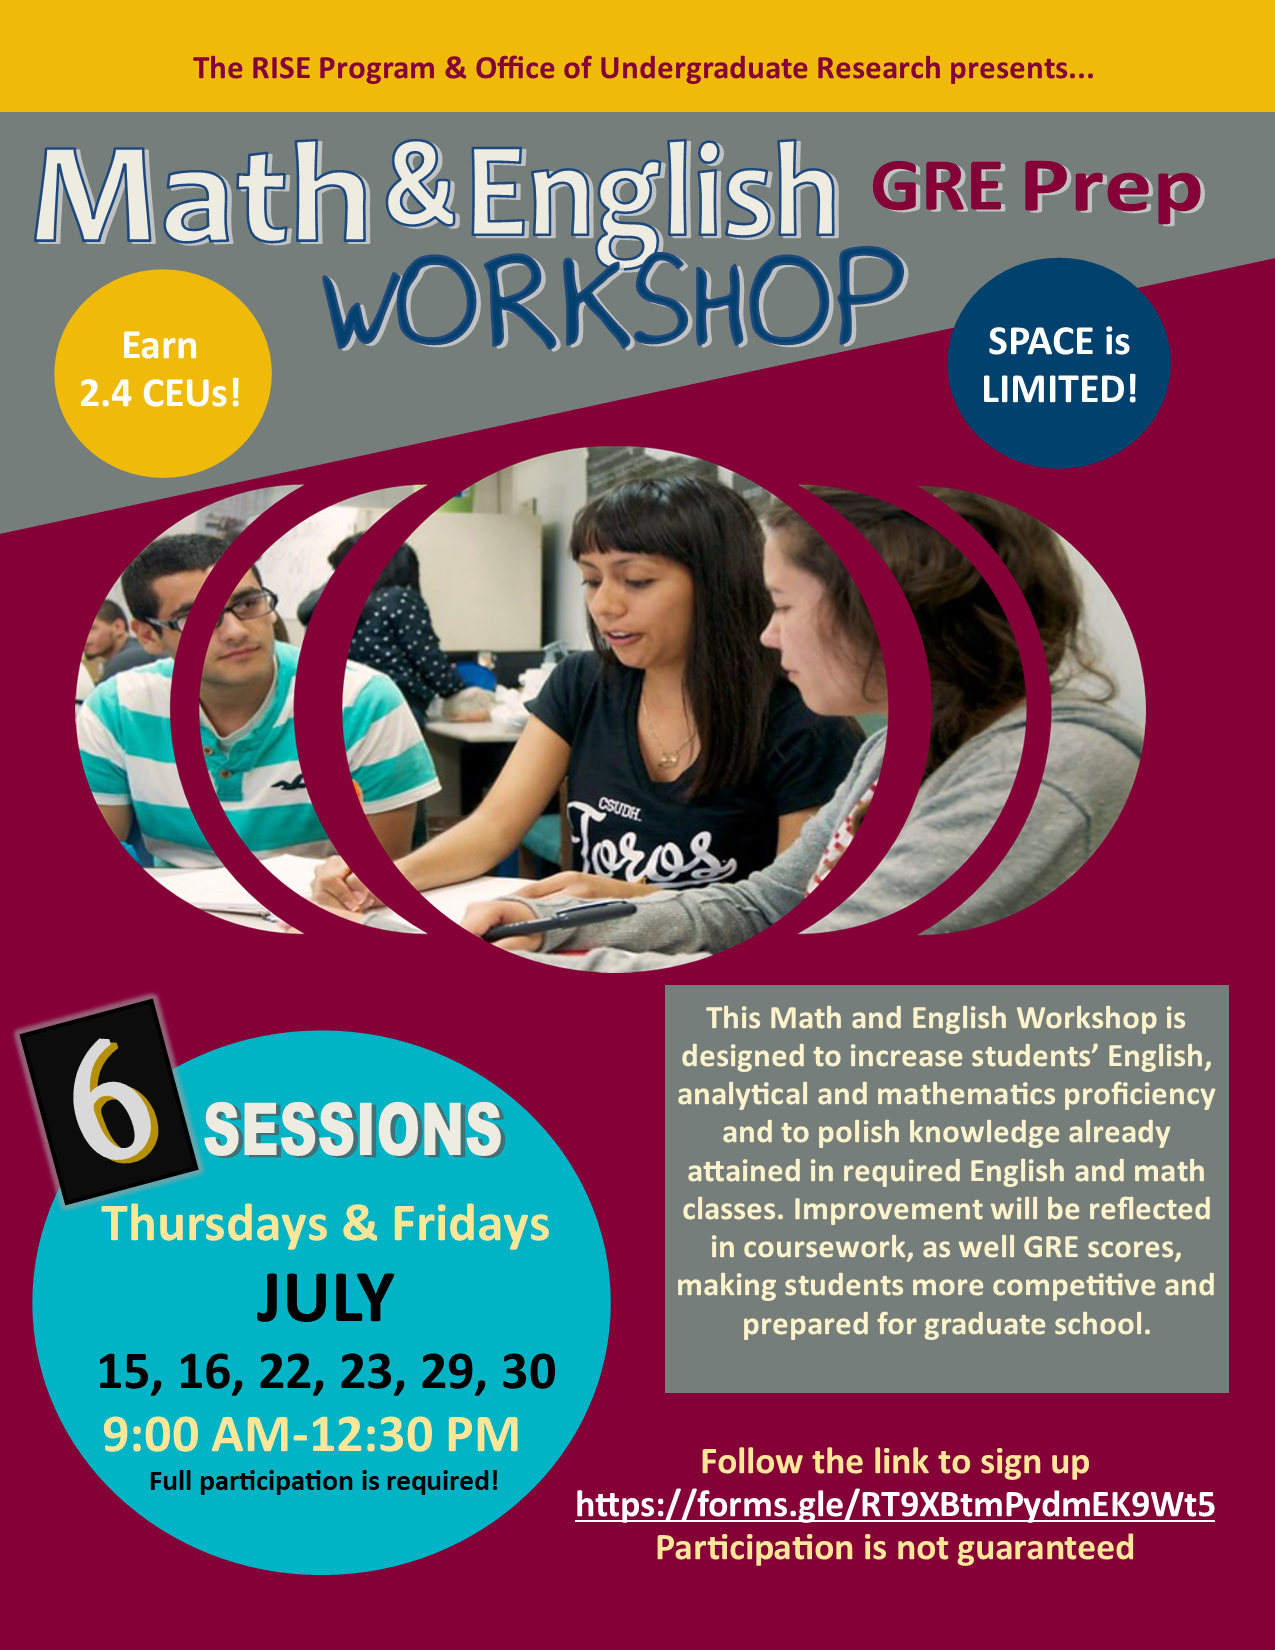 Math & English (GRE Prep) Workshop- Summer '21